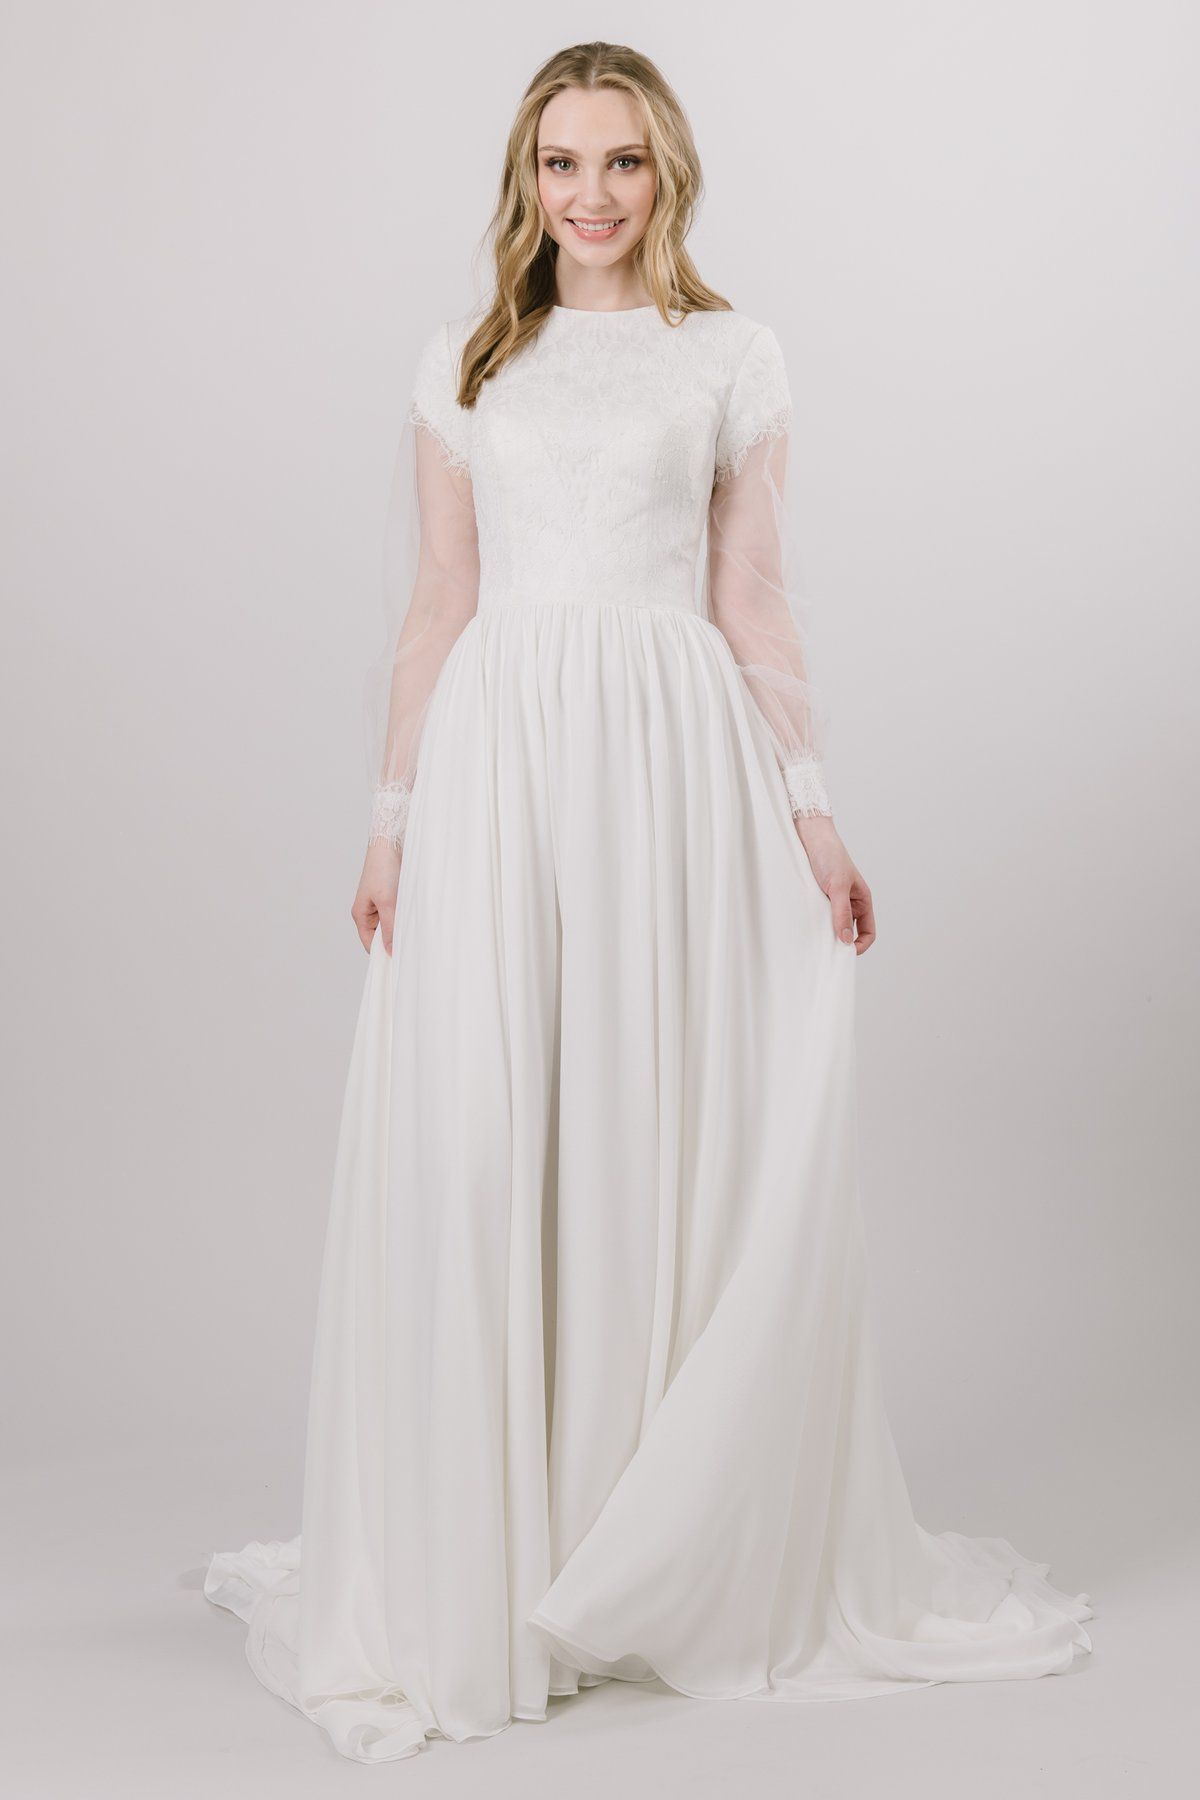 Discount 2020 Simple Elegant Lace Chiffon Modest Wedding